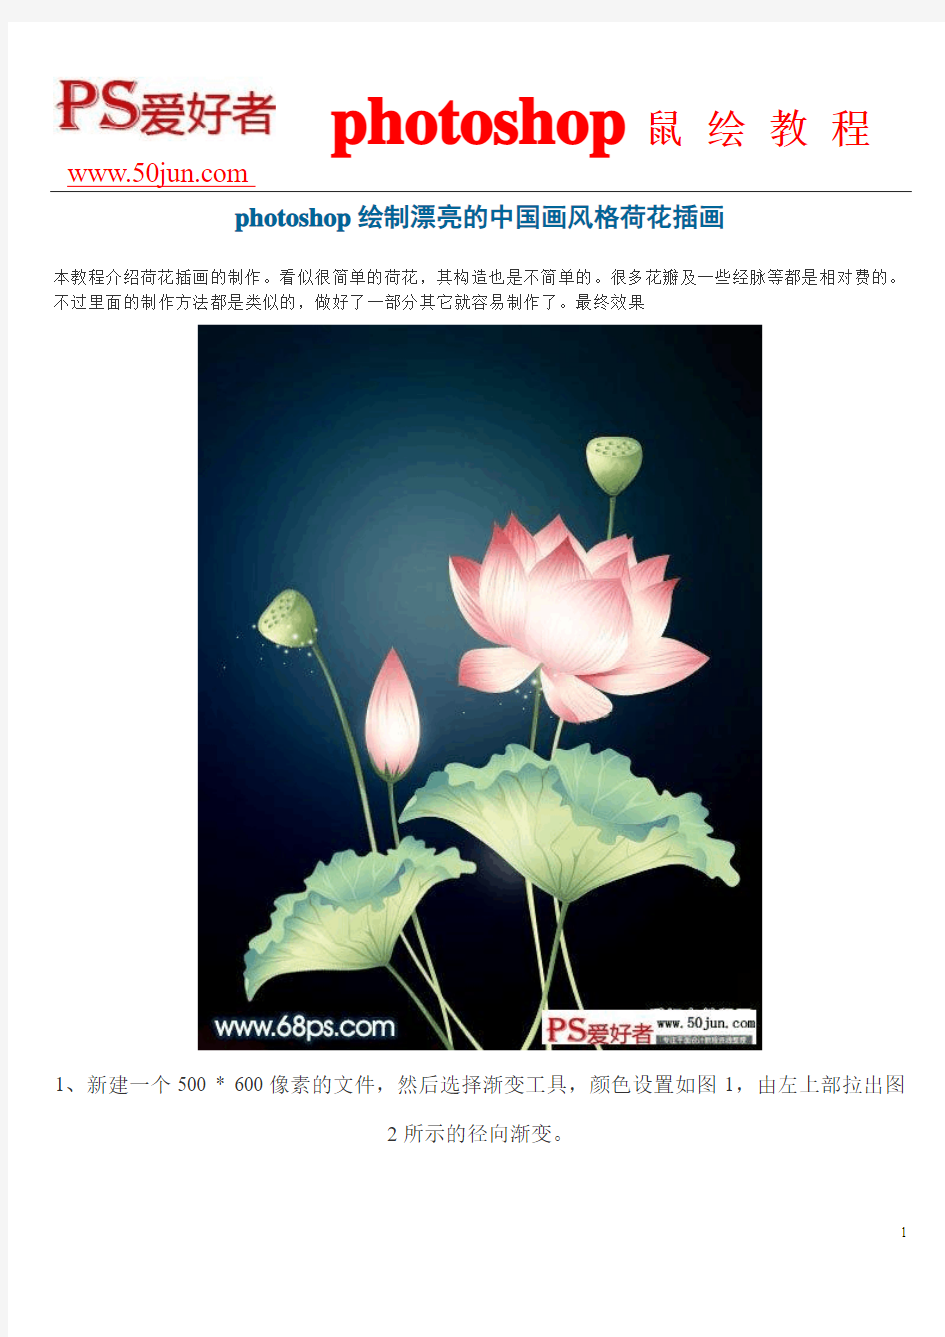 photoshop绘制漂亮的中国画风格荷花插画